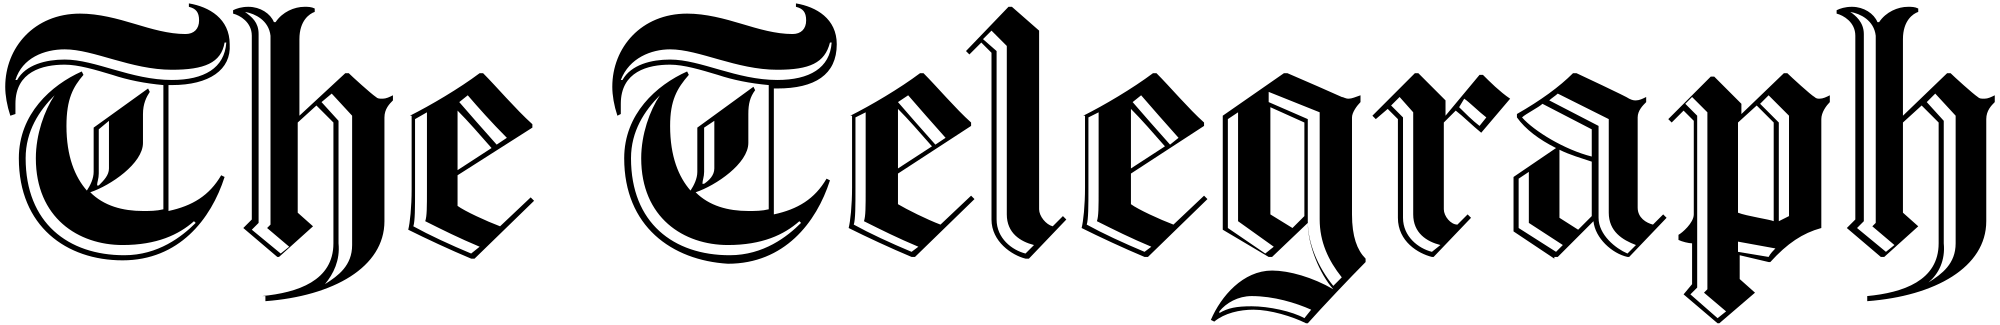 The Telegraph logo.png